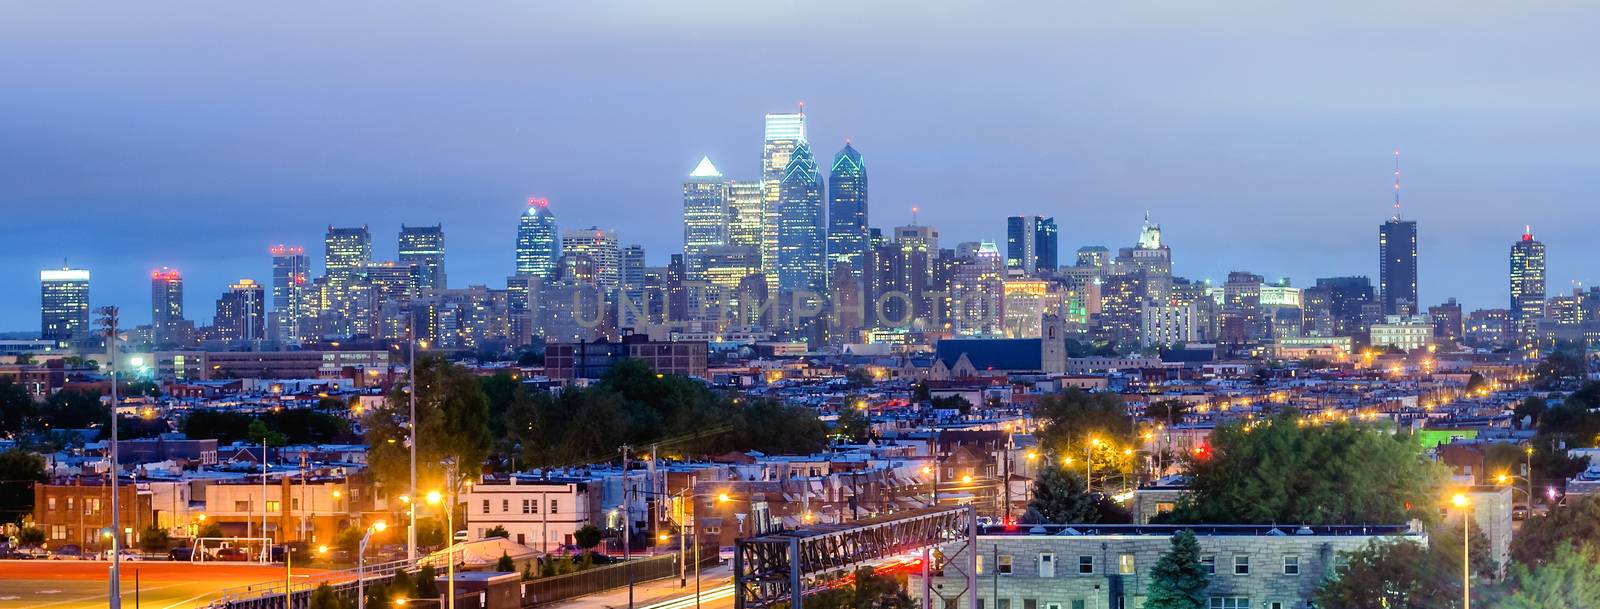 Philadelphia skyline at night as seen from the Stadium District, USA